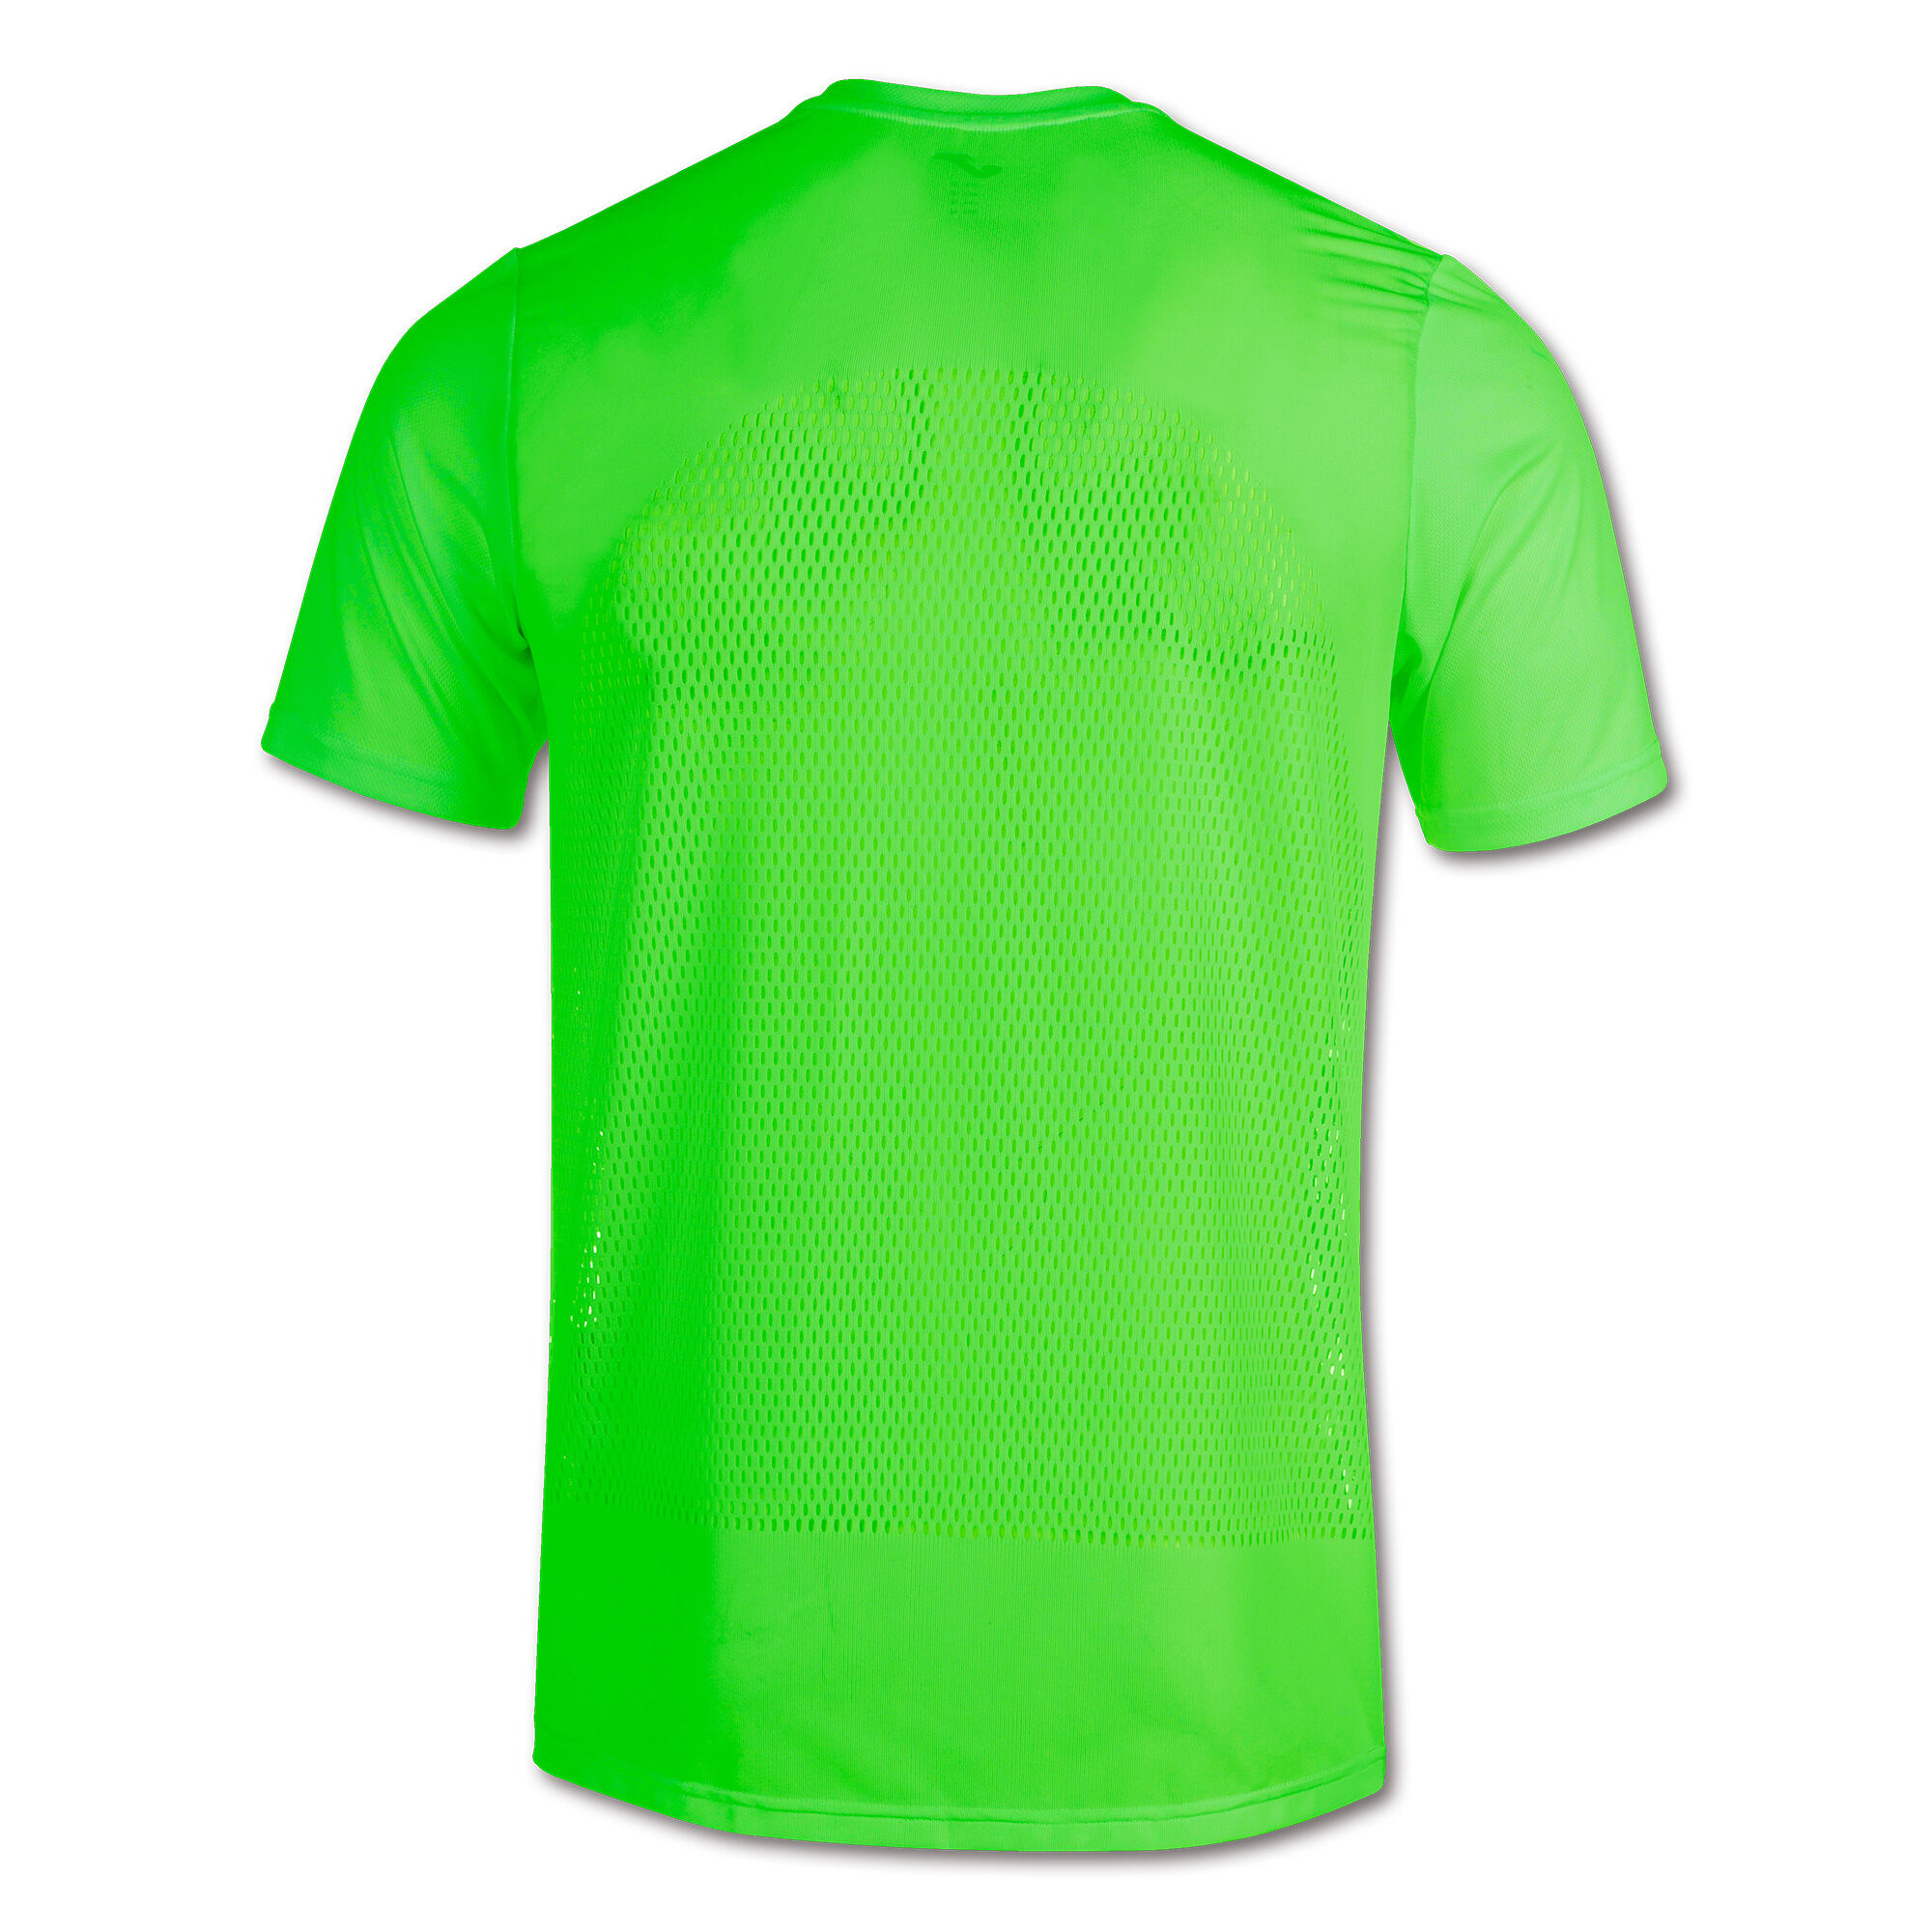 Camiseta manga corta hombre Marathon verde flúor